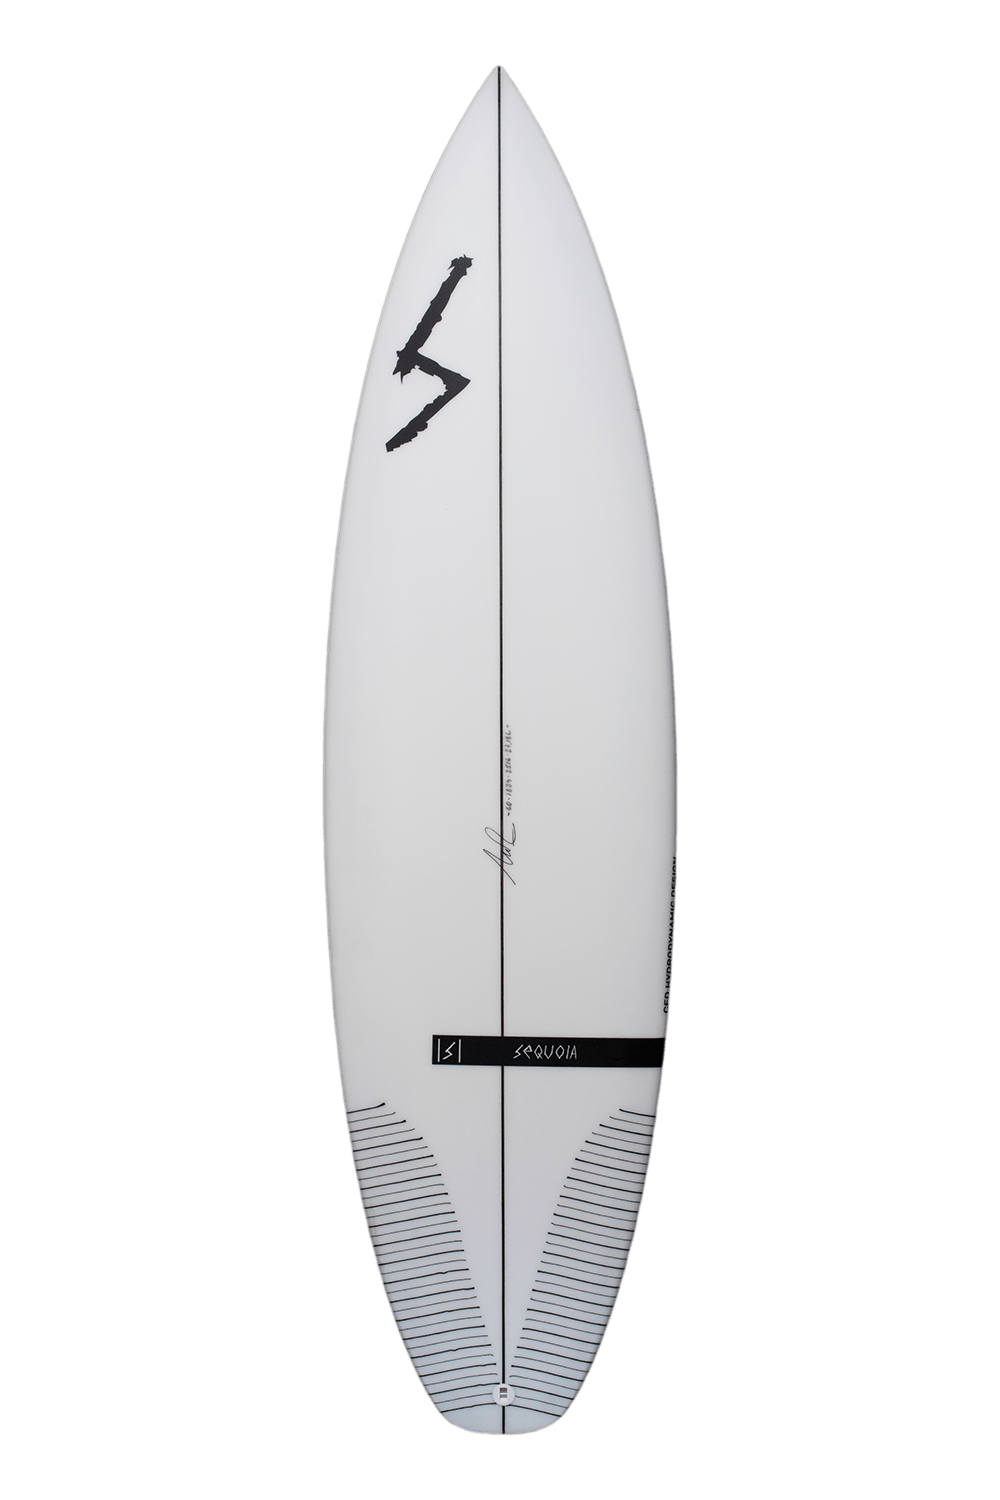 Carlos surfboards wsl qs shape